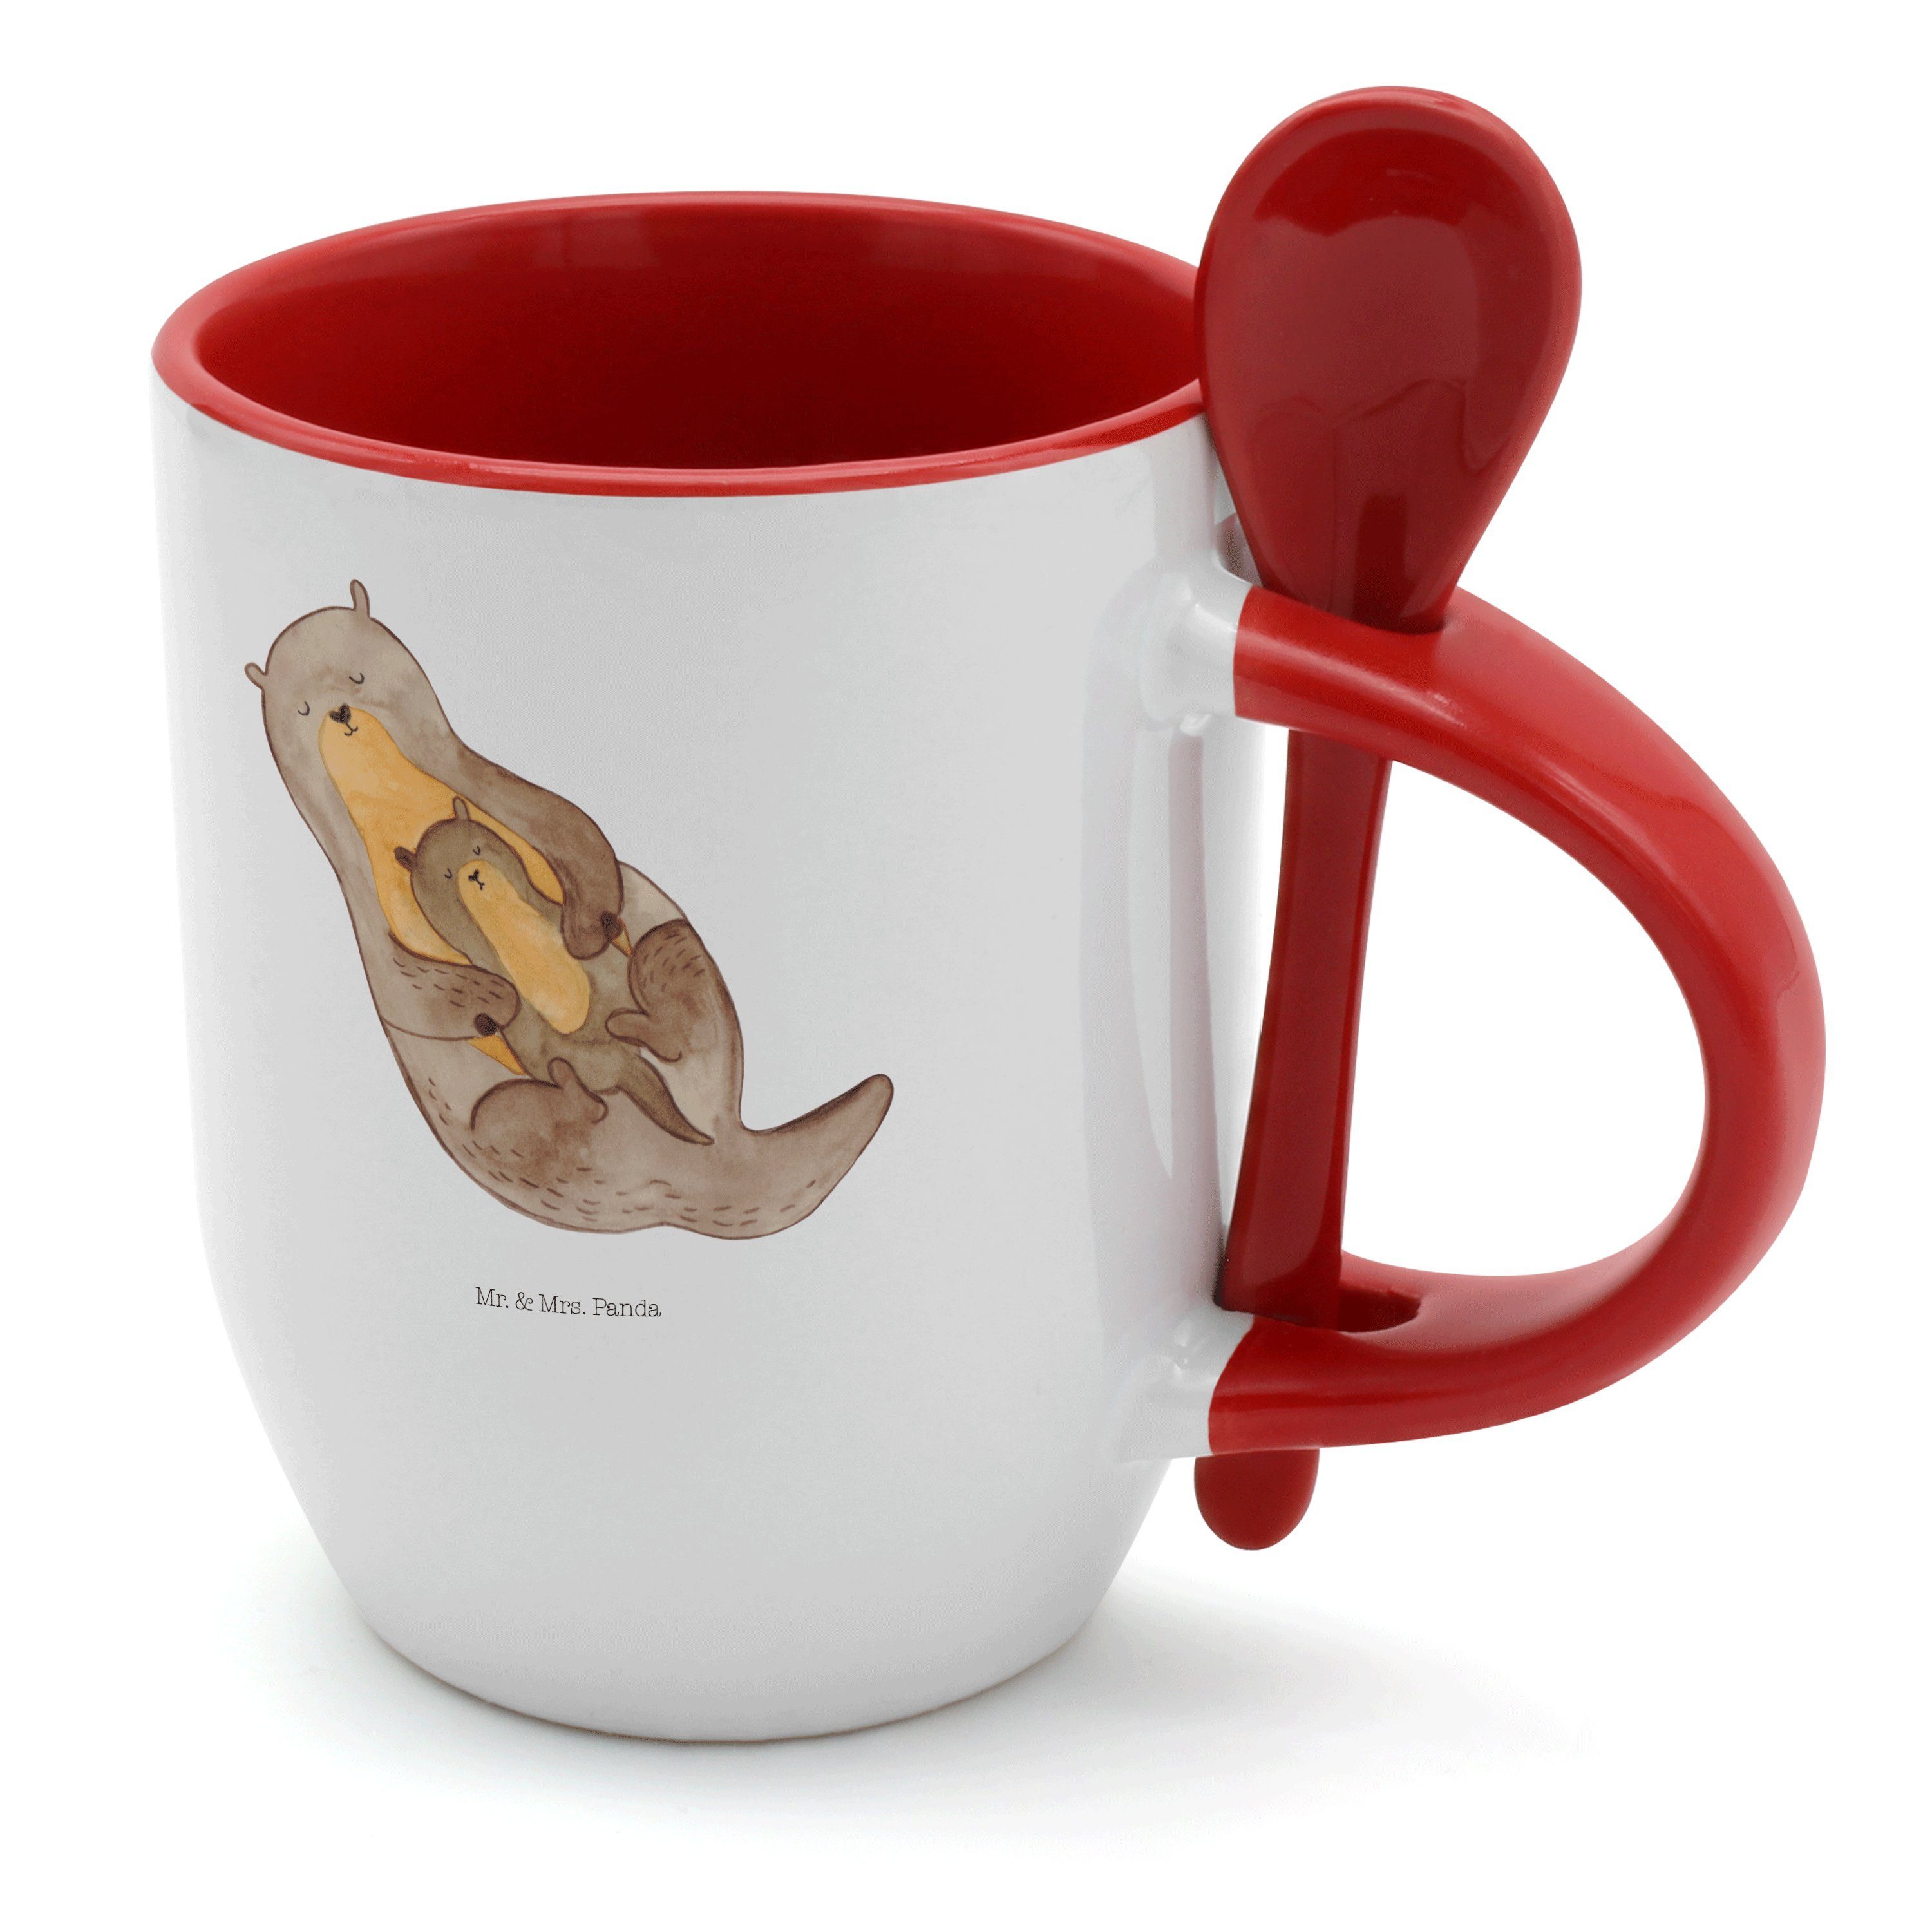 Mr. & Mrs. Panda Tasse Otter mit Kind - Weiß - Geschenk, Tasse, Seeotter, Kaffeetasse, Kaffe, Keramik